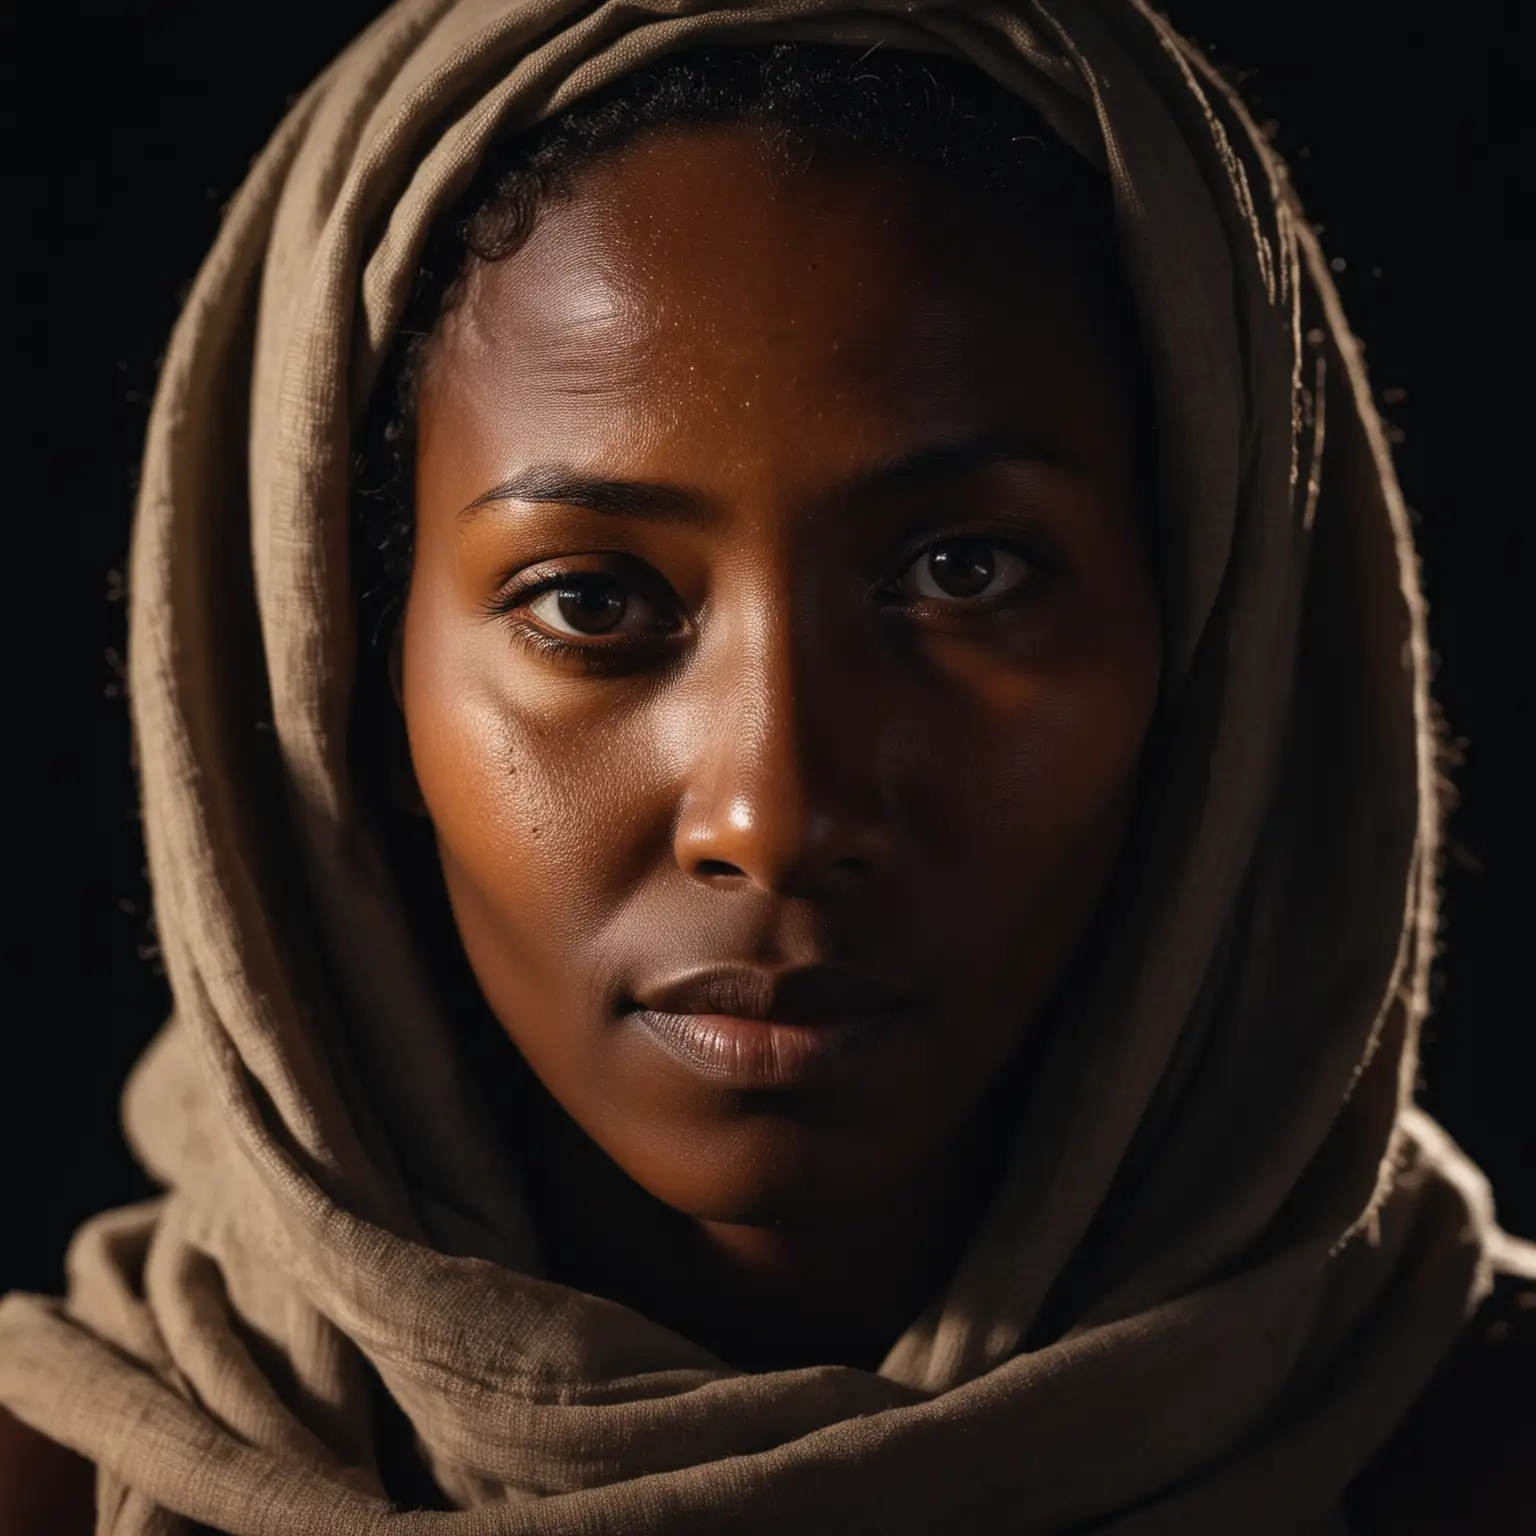 Portrait of a 50YearOld Ethiopian Woman with Intense Gaze